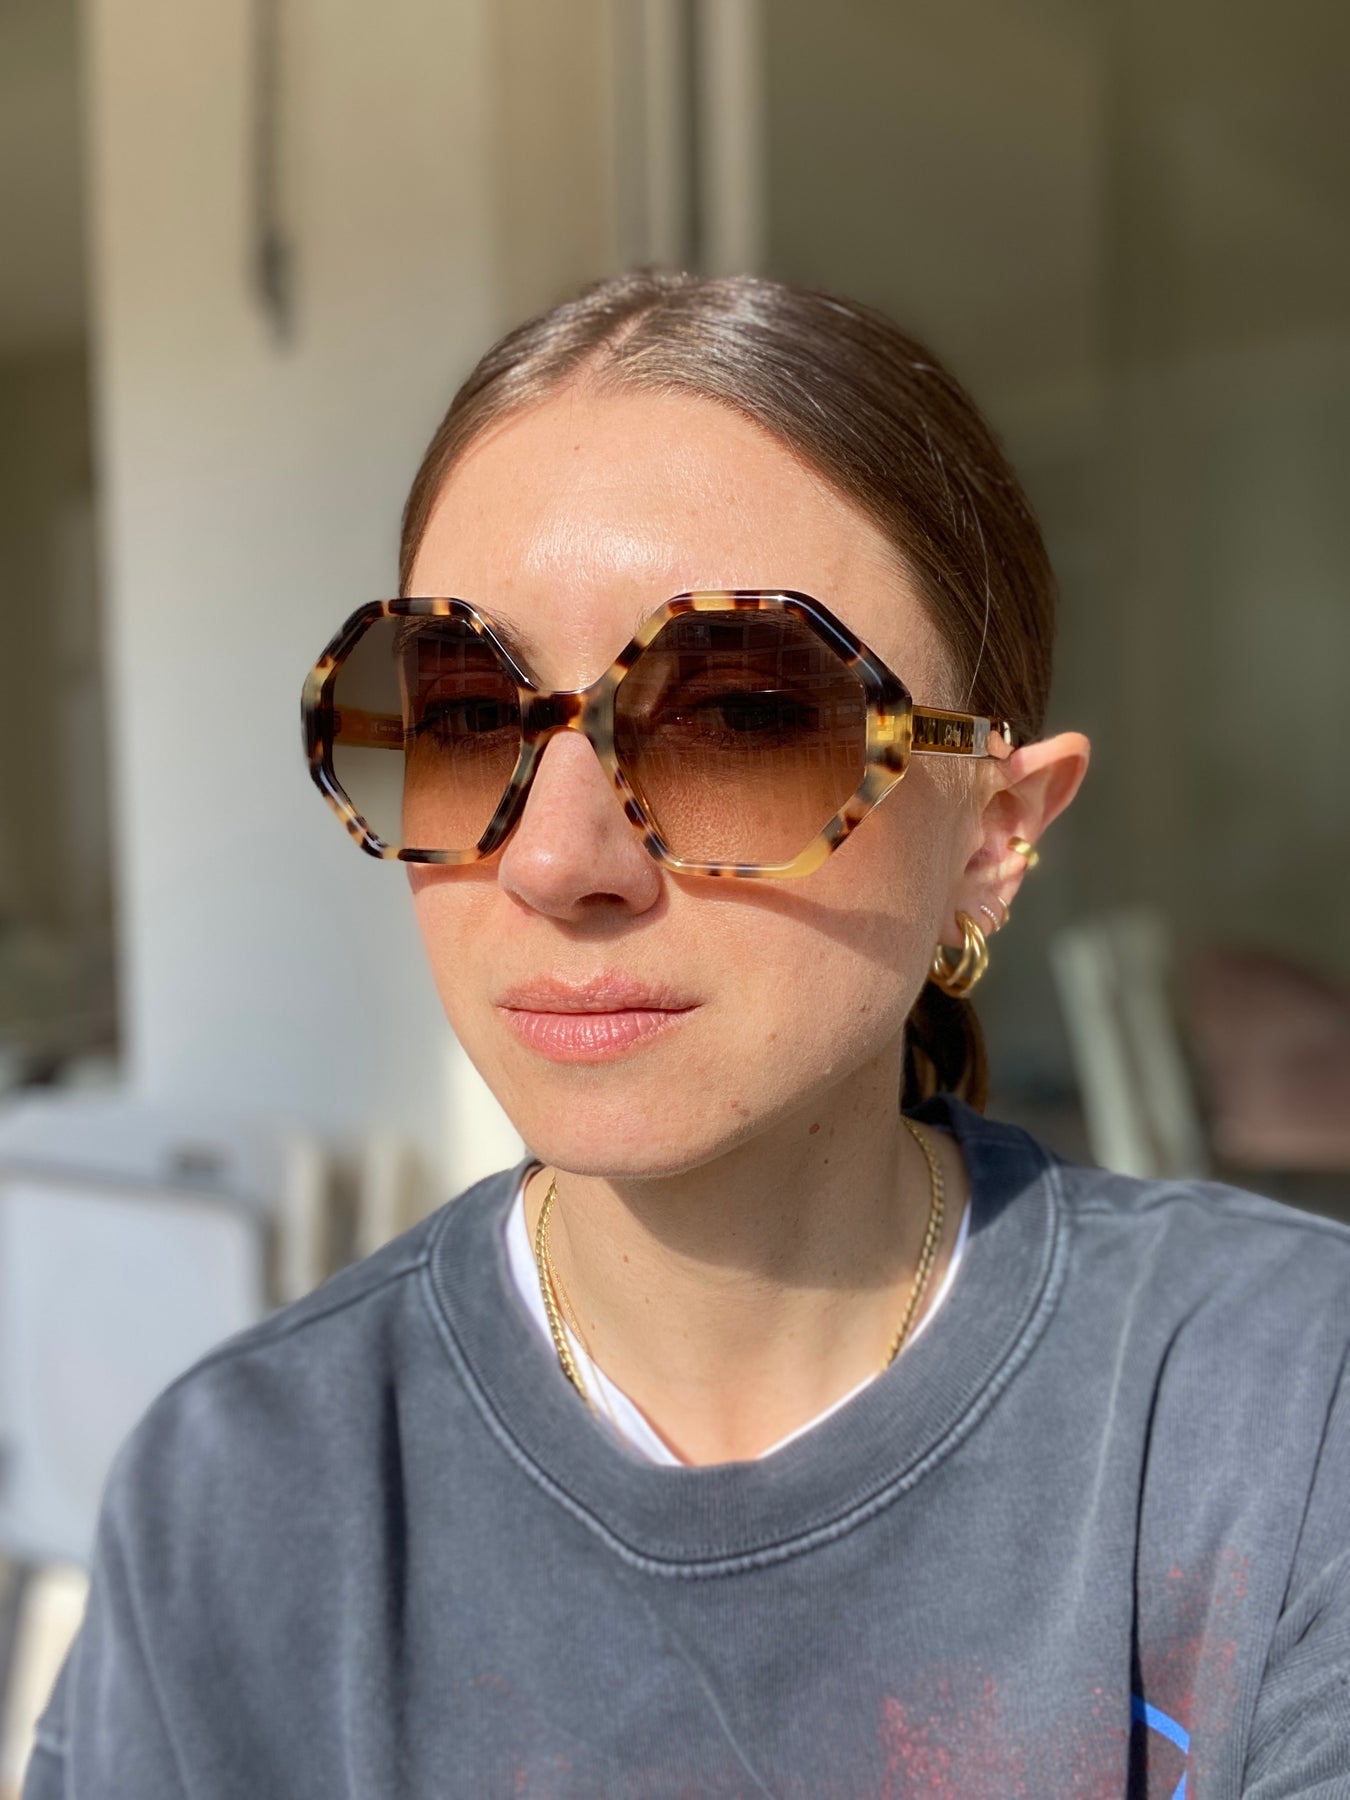 CHLOÉ WILLOW hexagon-frame tortoiseshell acetate sunglasses